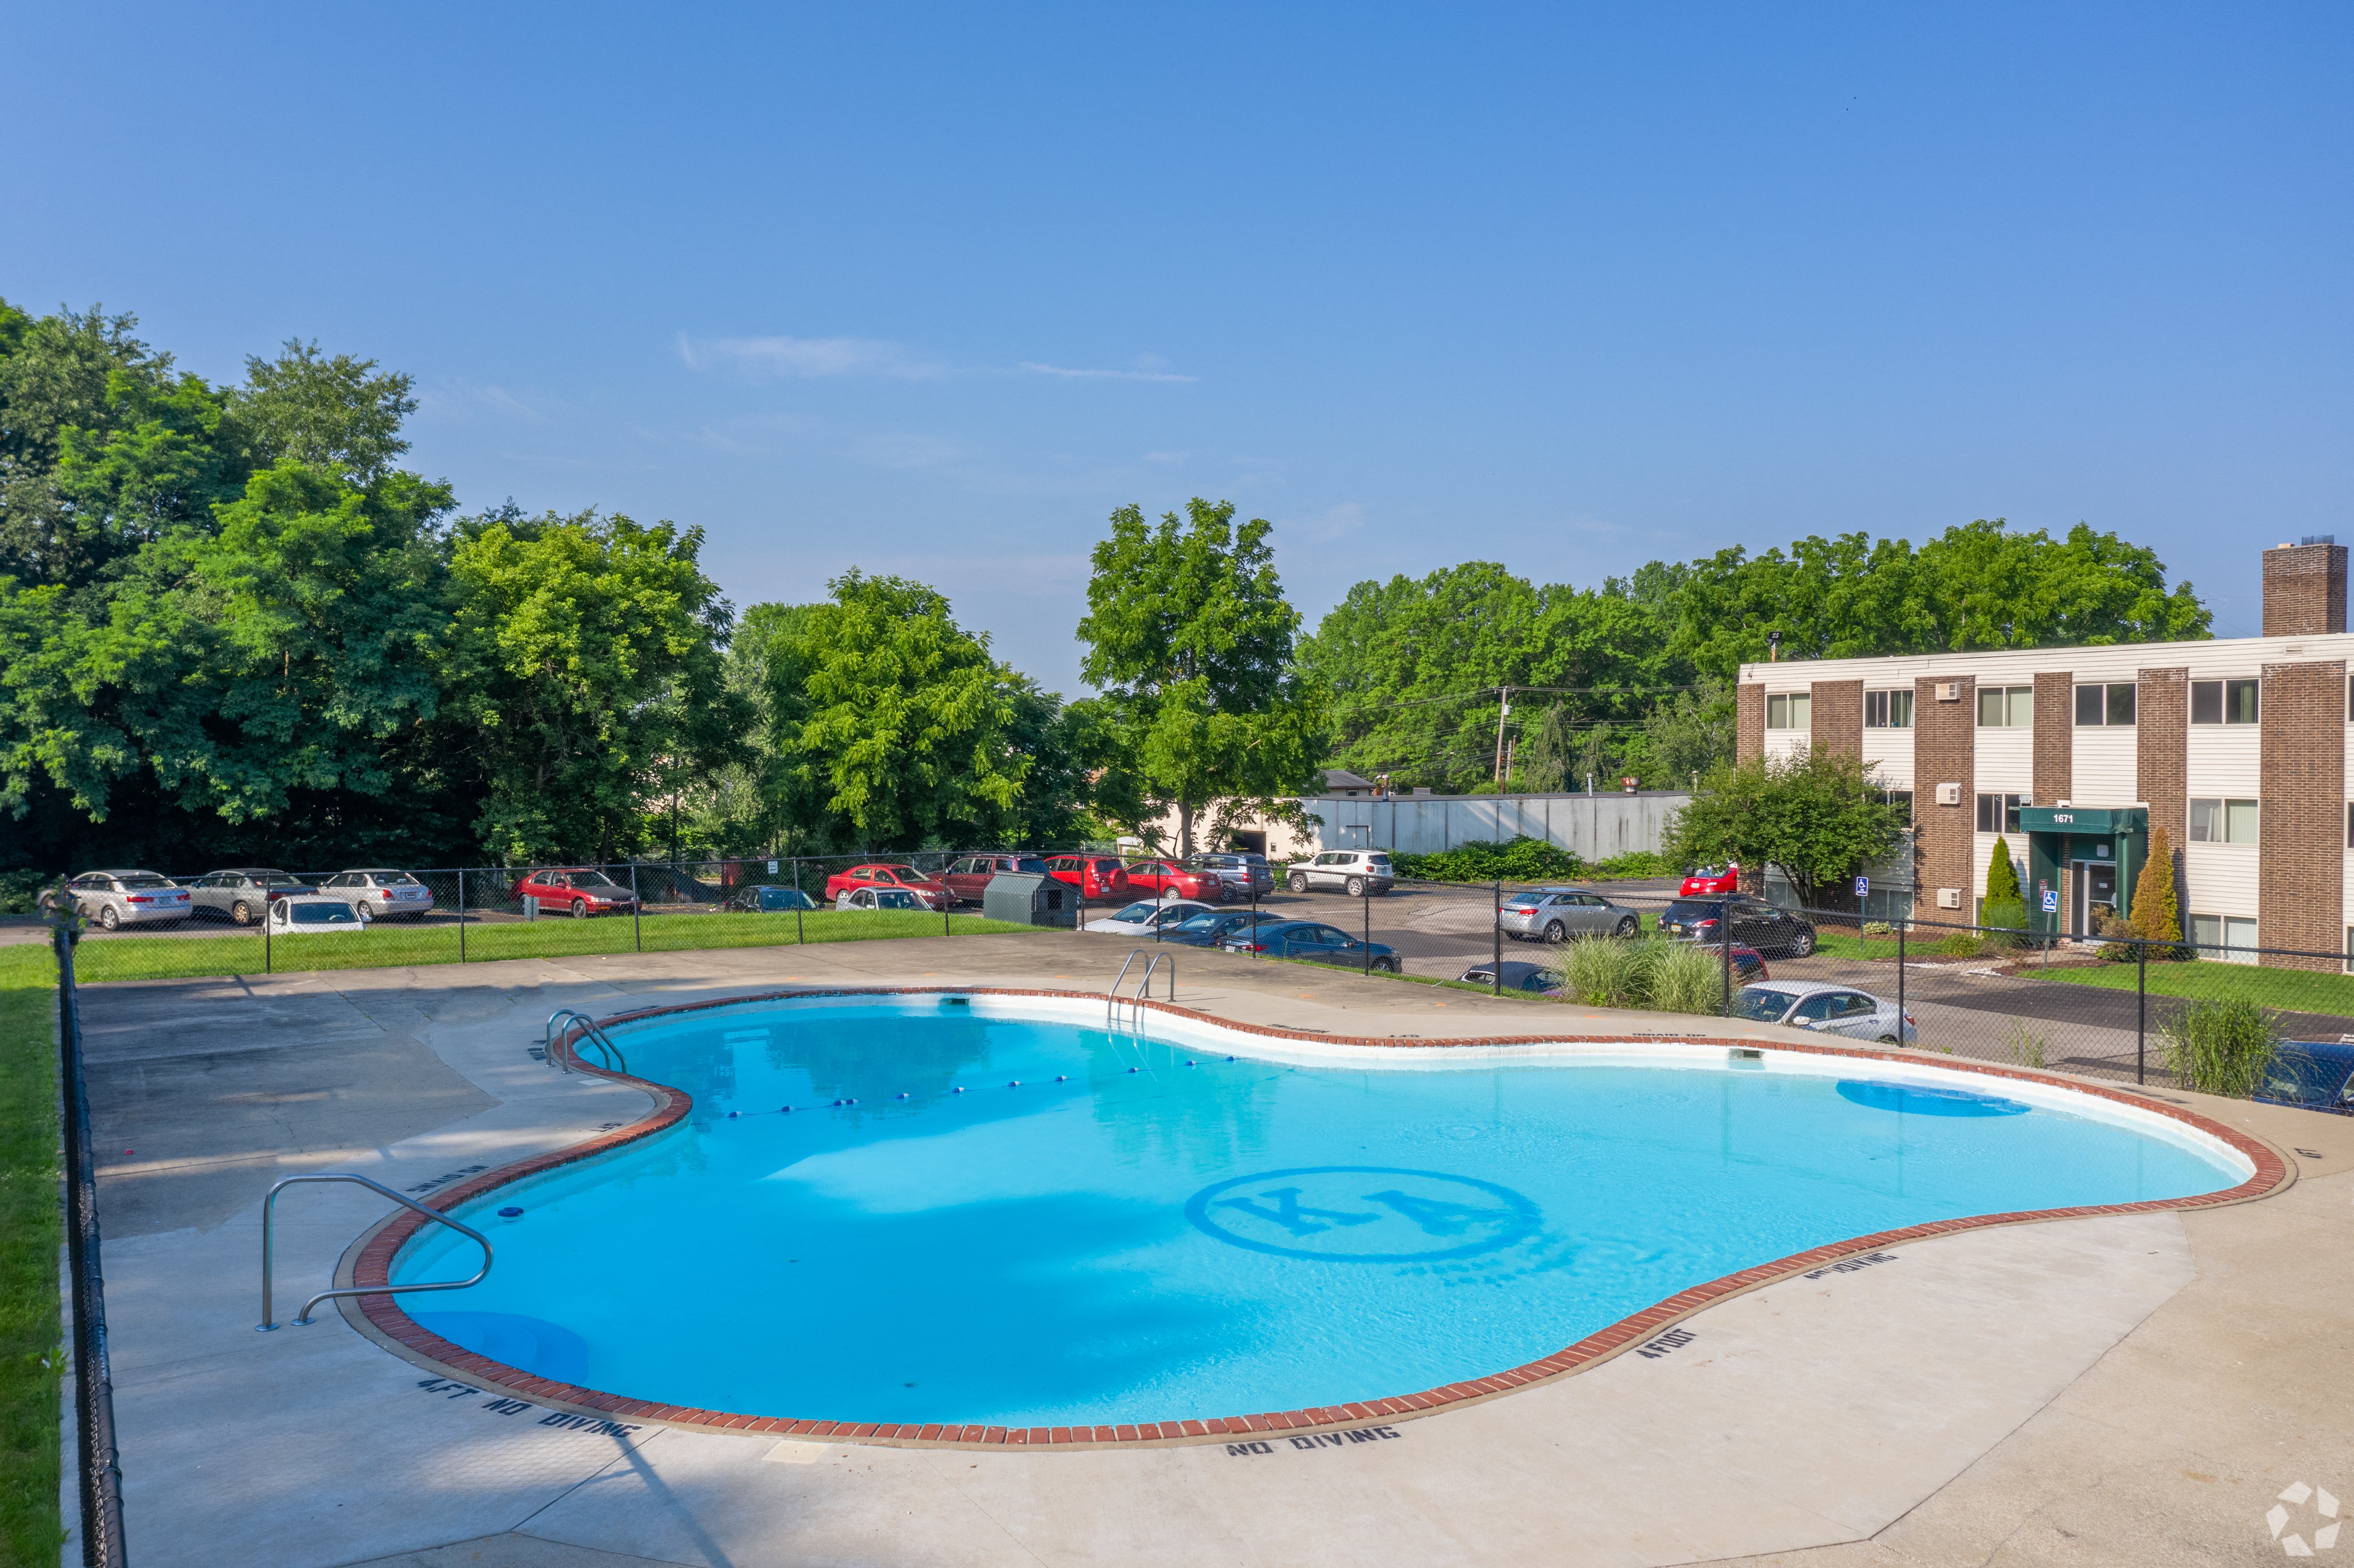 Sparkling Swimming Pool at Jordan Court Apartments, Integrity Realty, Kent, Ohio